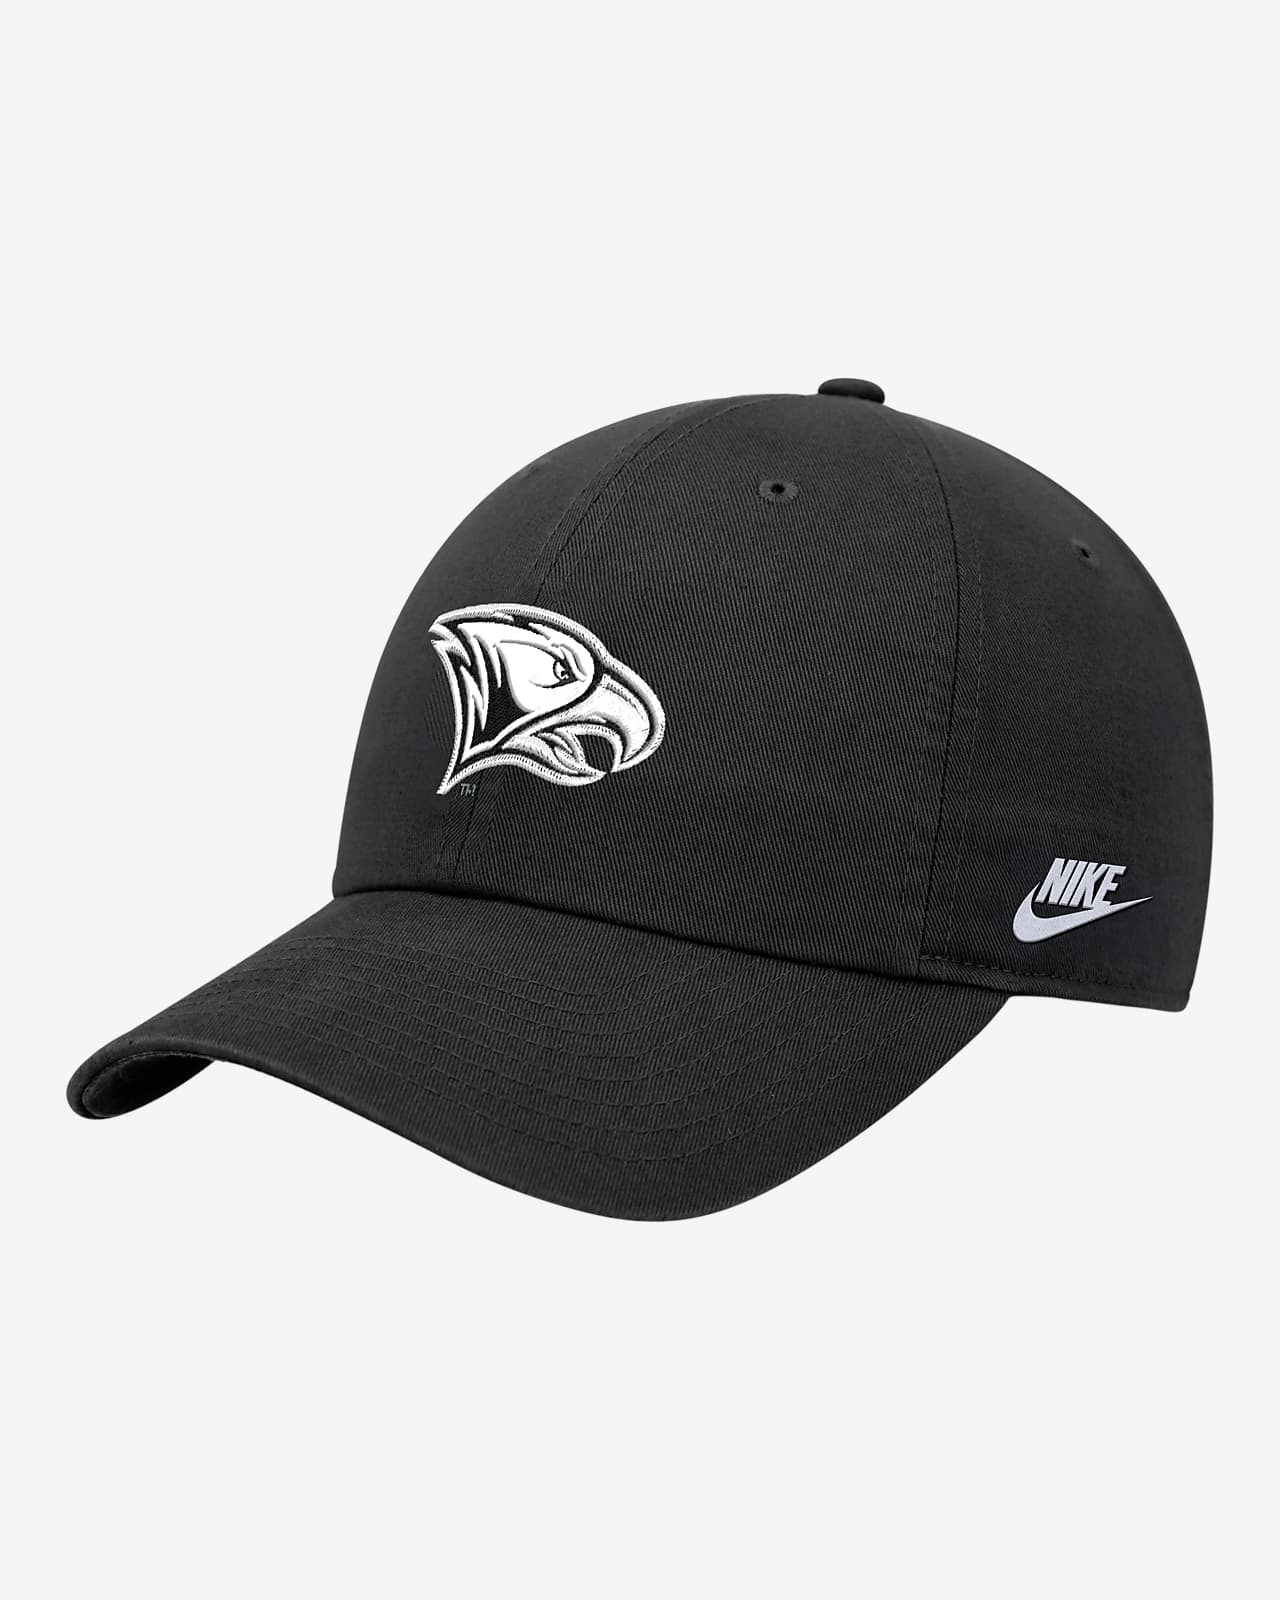 North Carolina Central Nike College Adjustable Cap